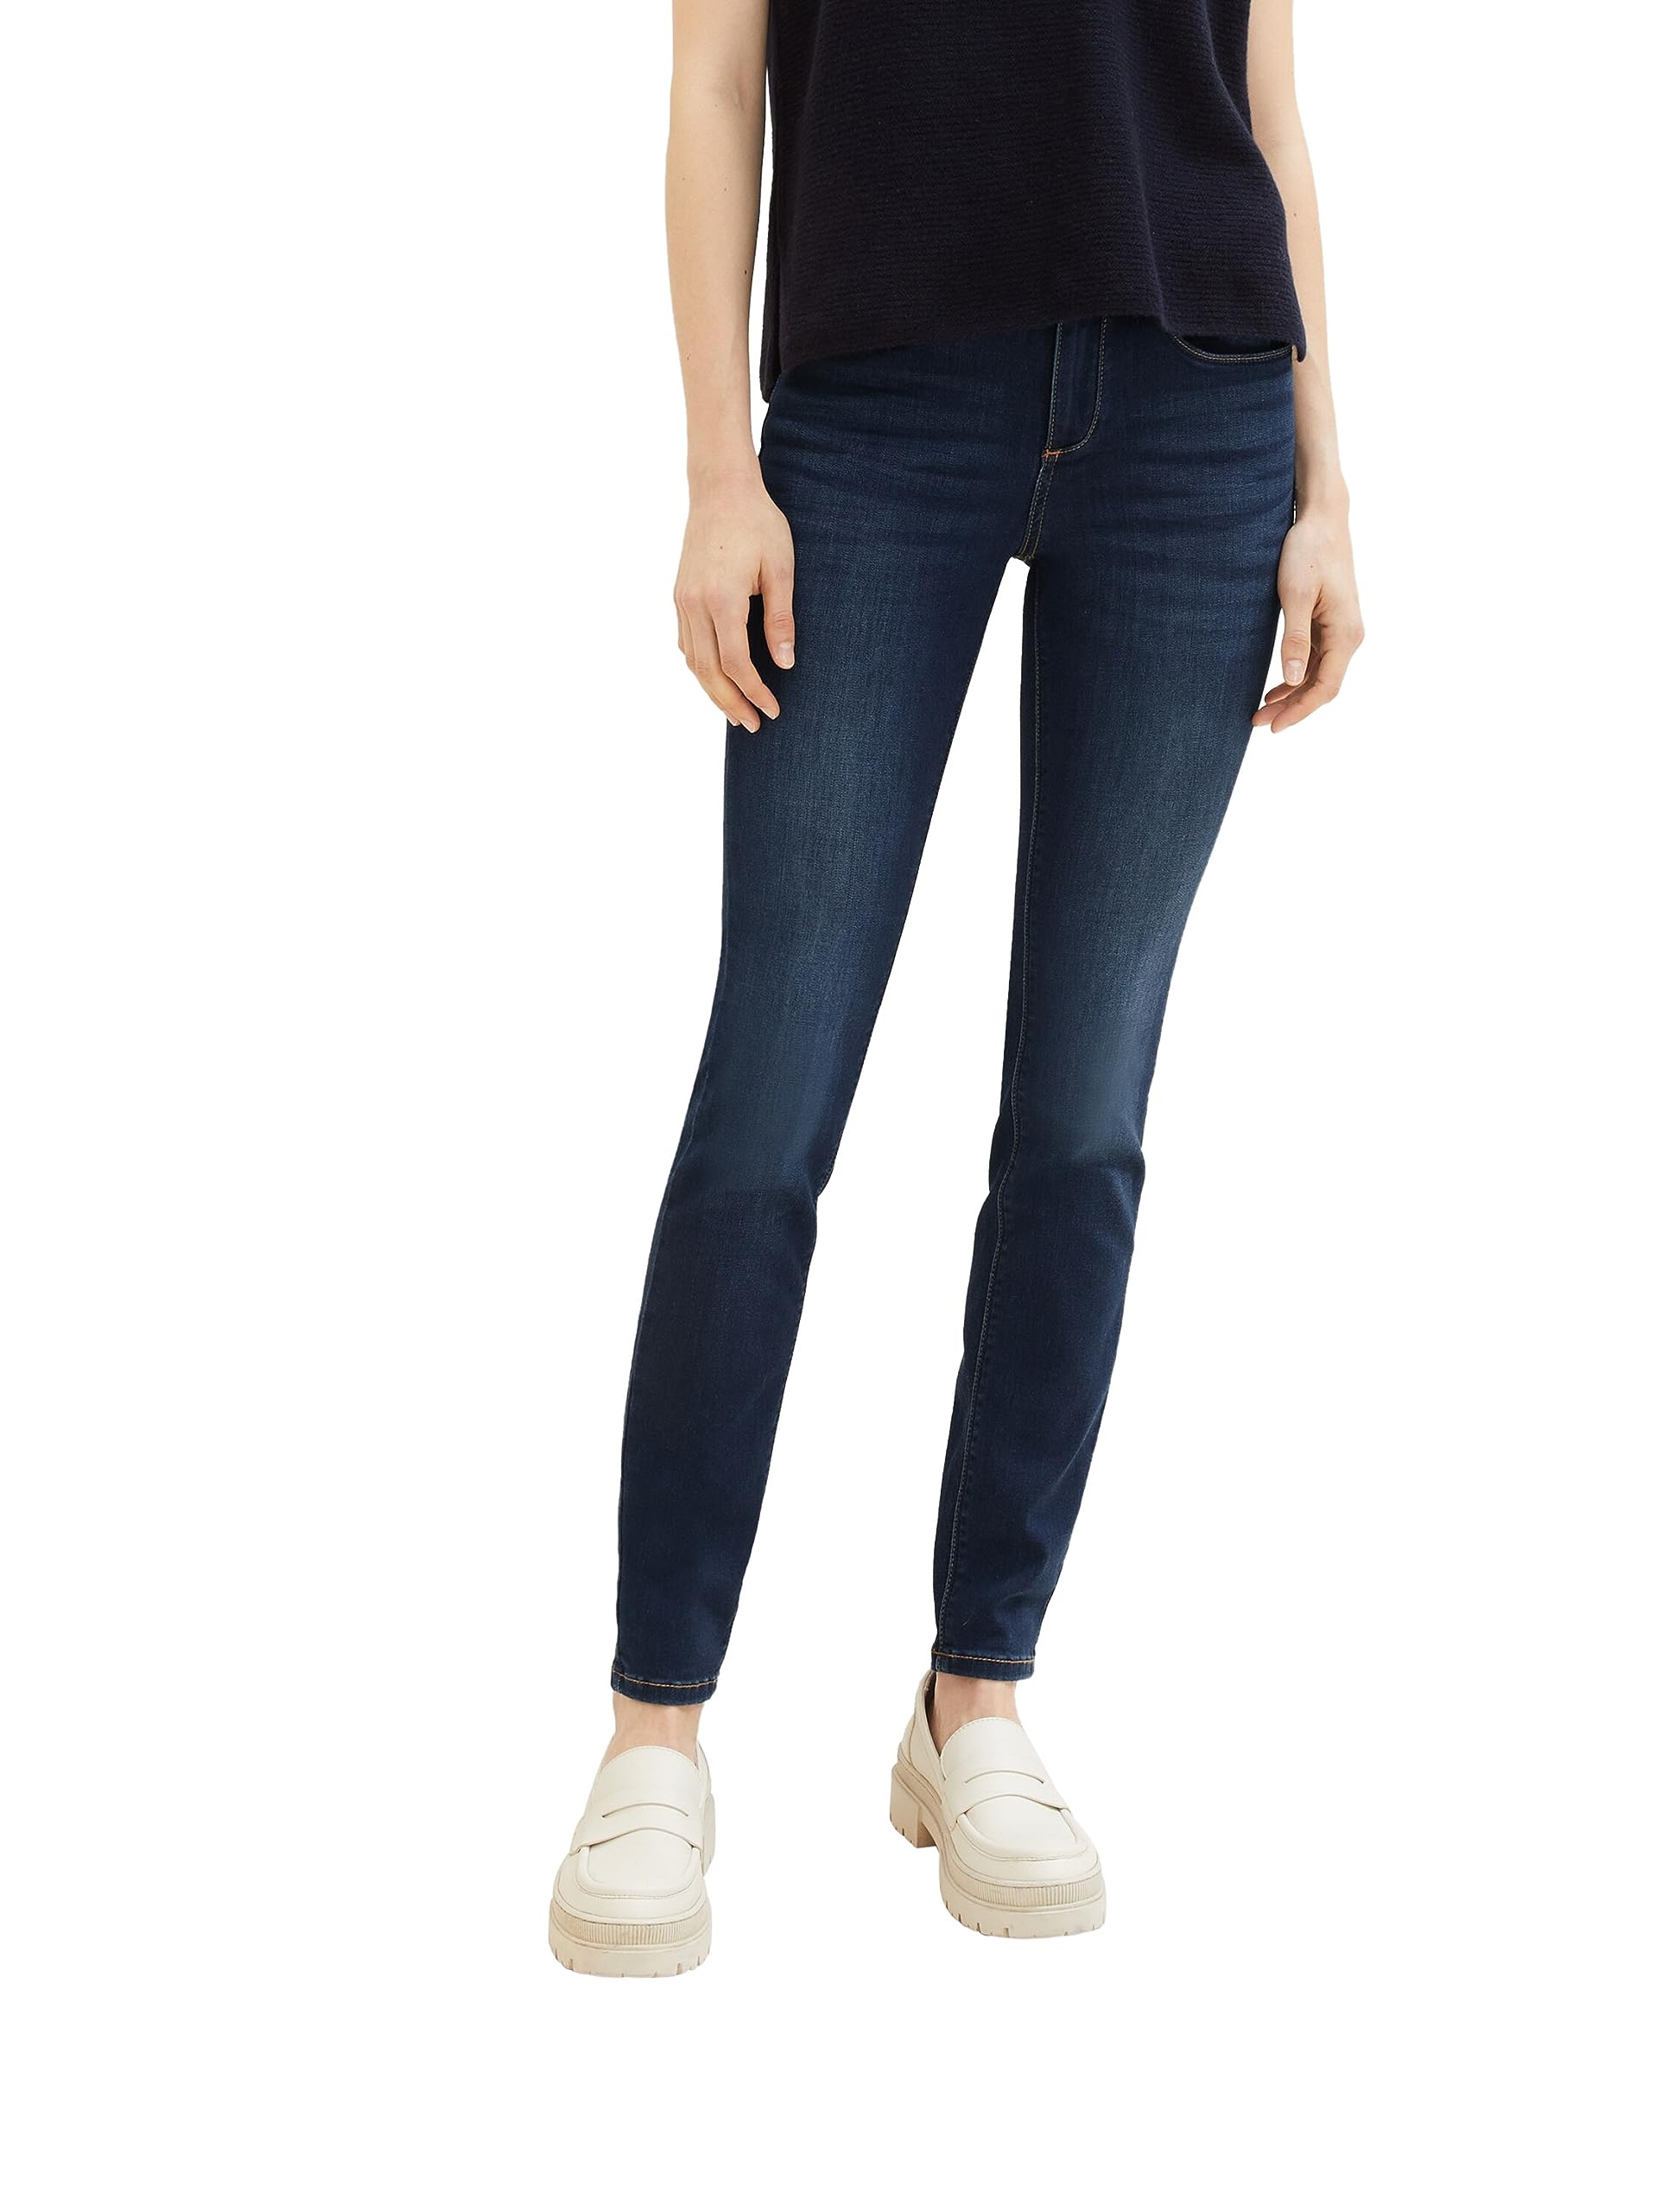 TOM TAILOR Damen 1008122 Alexa Skinny Jeans, 10282 - Dark Stone Wash Denim, 28W / 32L EU